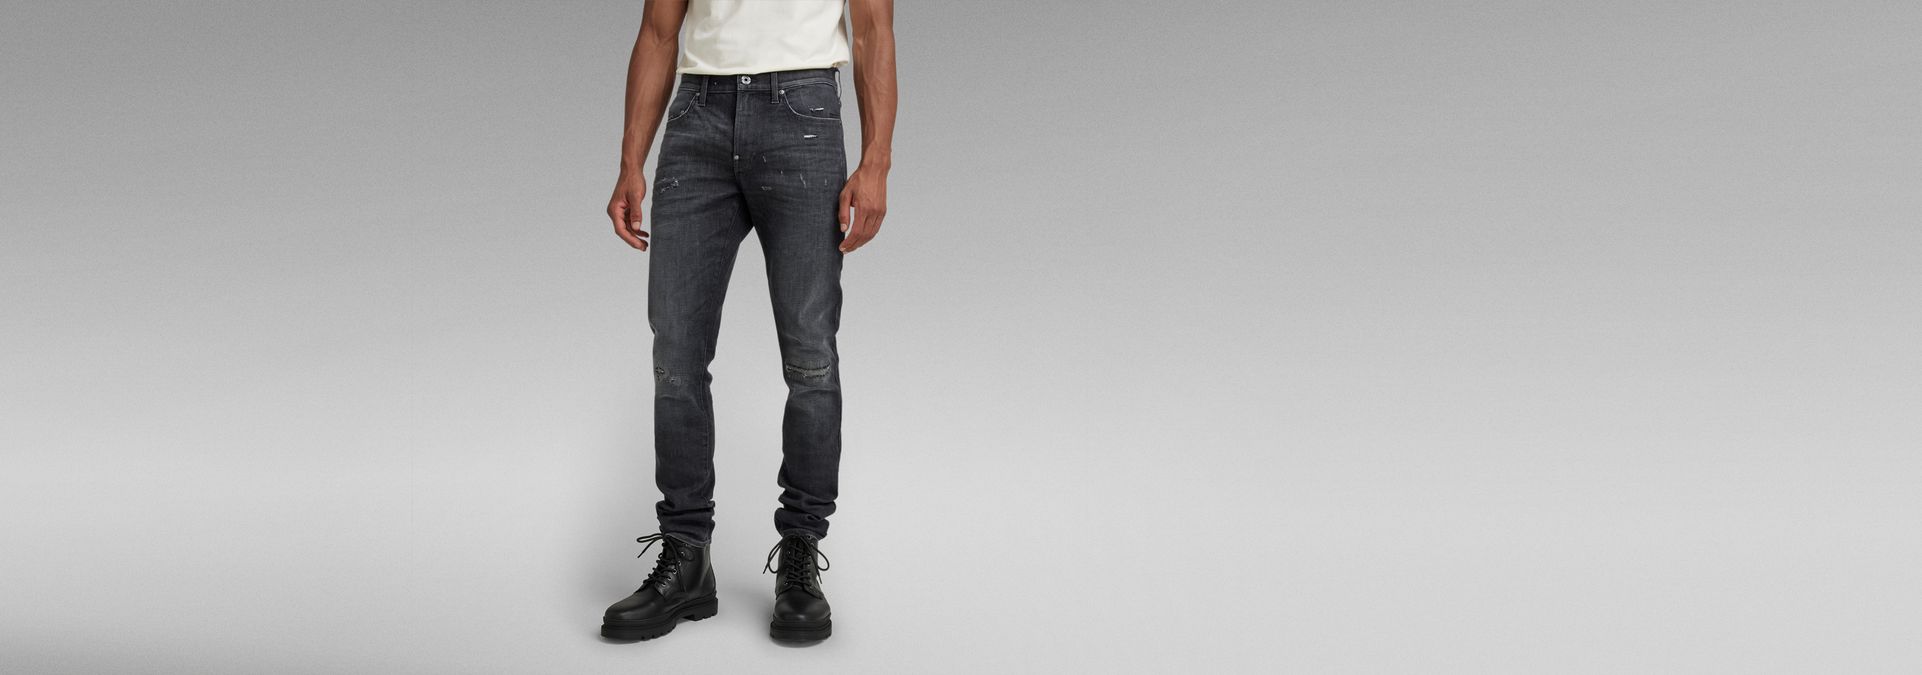 Revend FWD Skinny Jeans | Black | G-Star RAW®